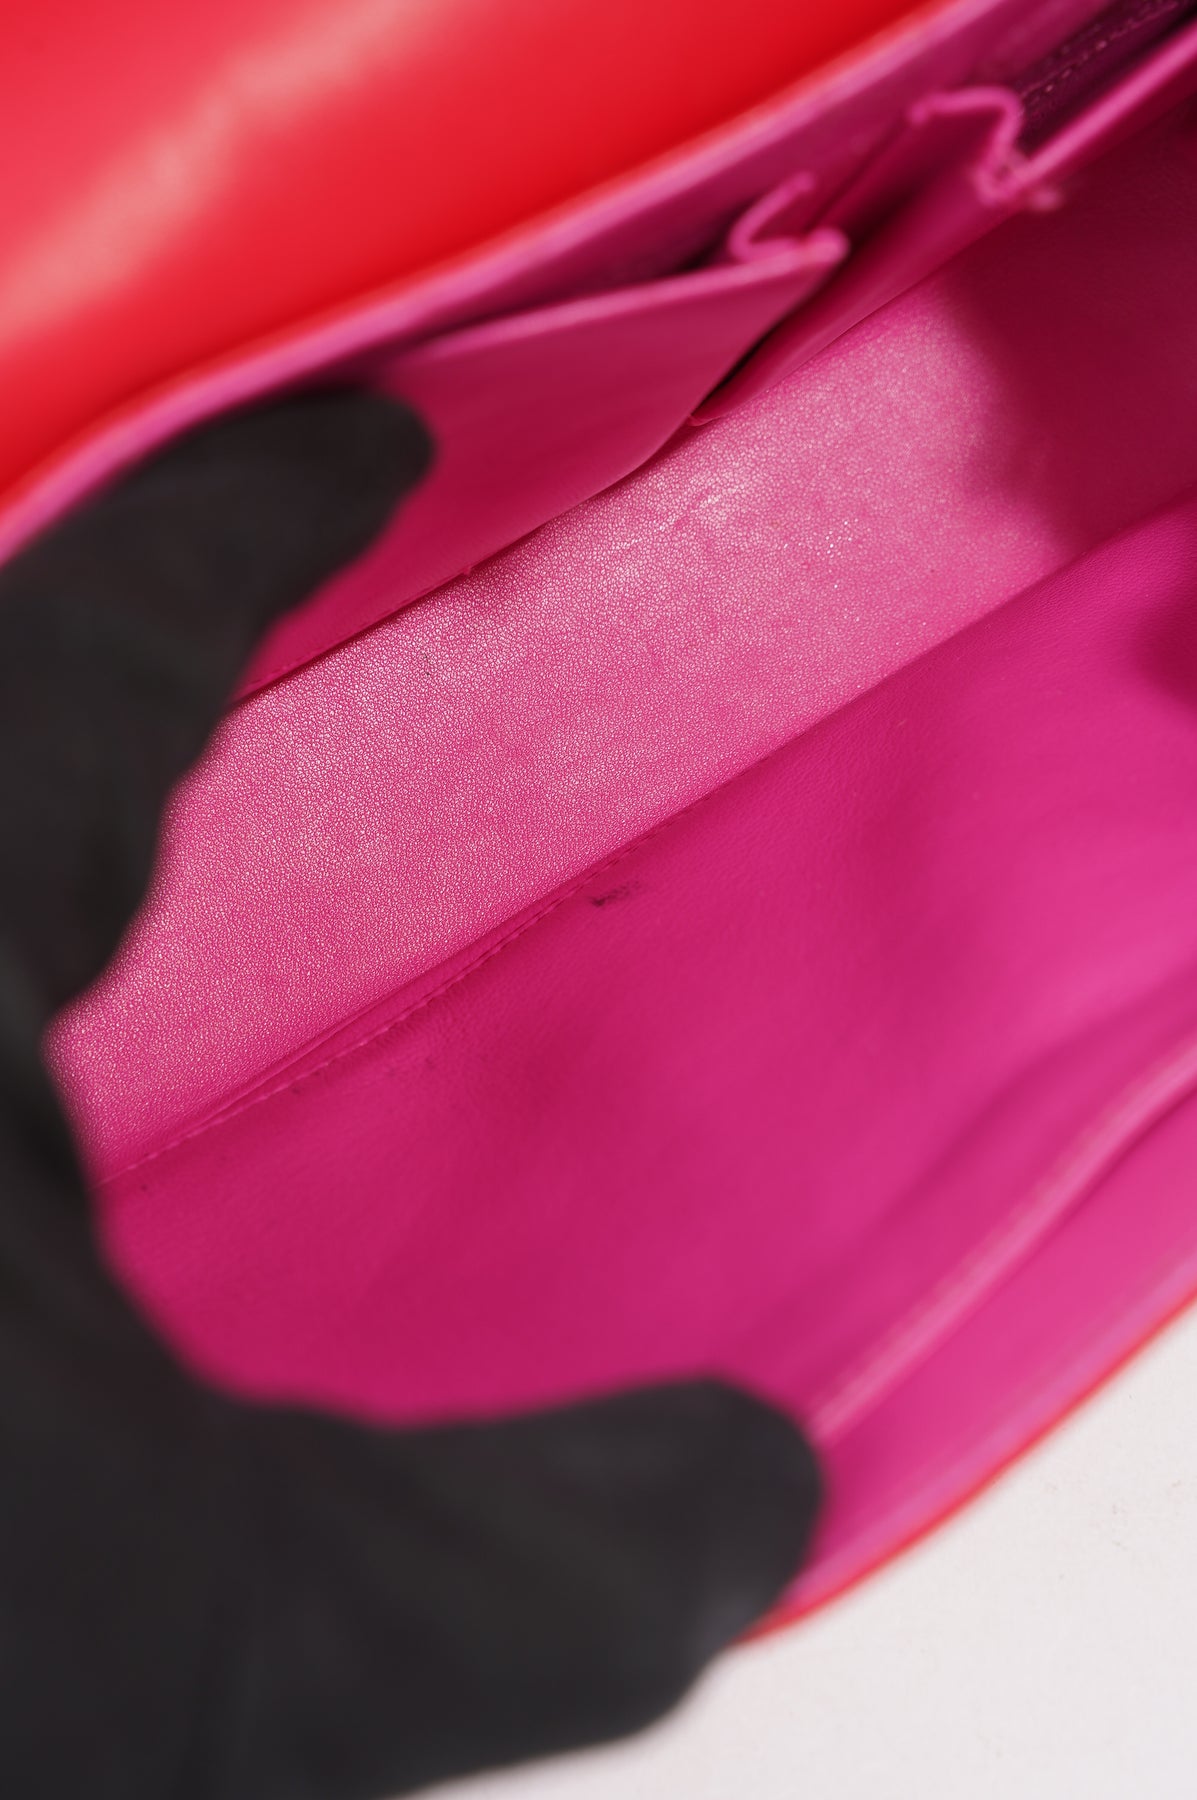 Christian Dior Saddle Handbag Purse Satin Beige Pink Brown 05RU